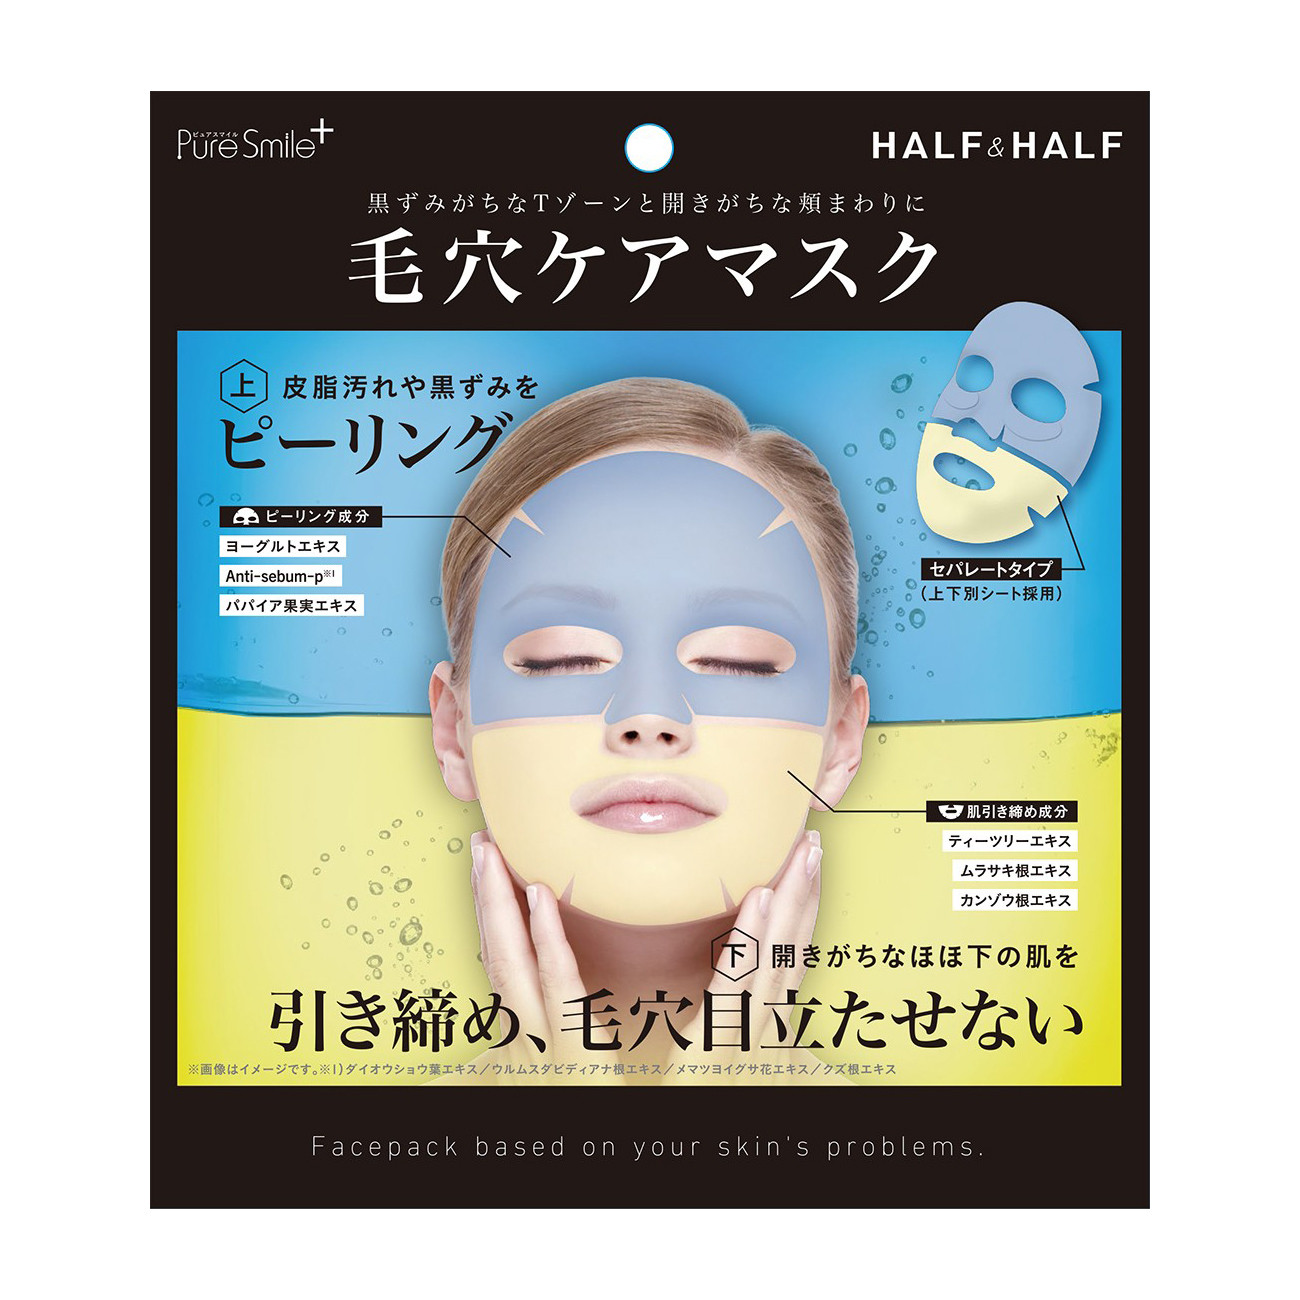 Puresmile Plus Half & Half  Mask - Pore Care + T-Zone